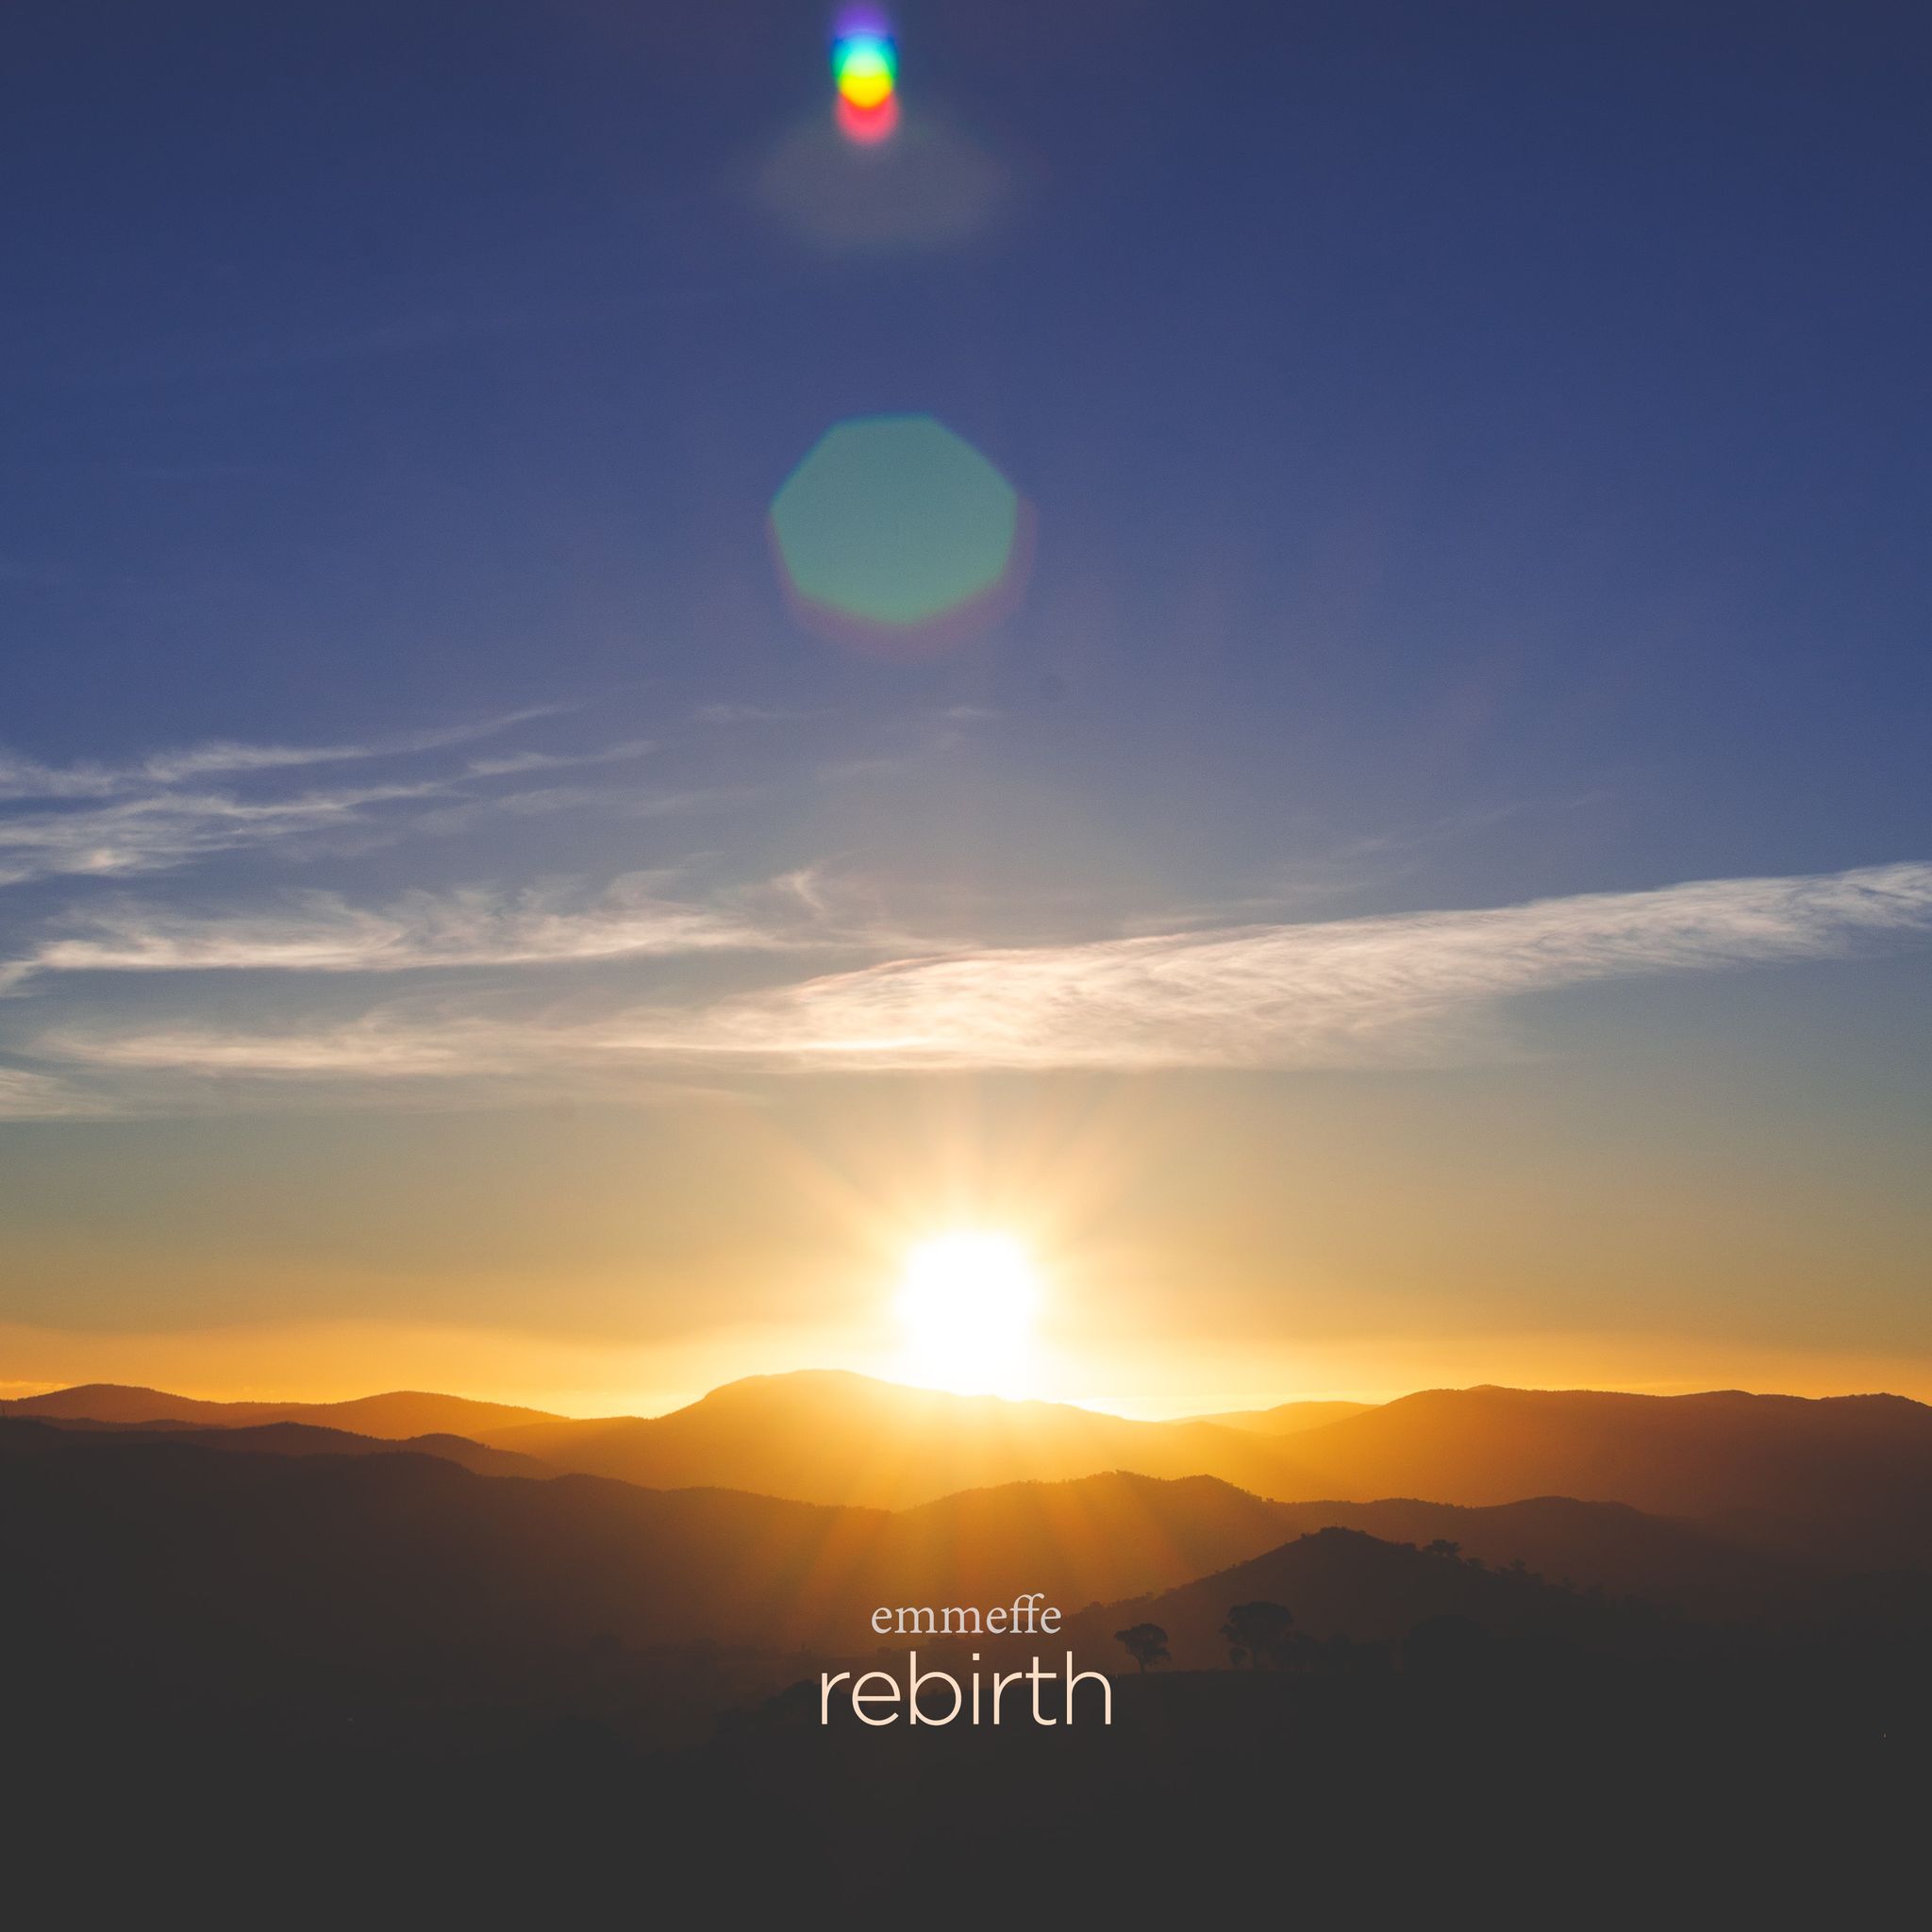 Emmeffe – “Rebirth”